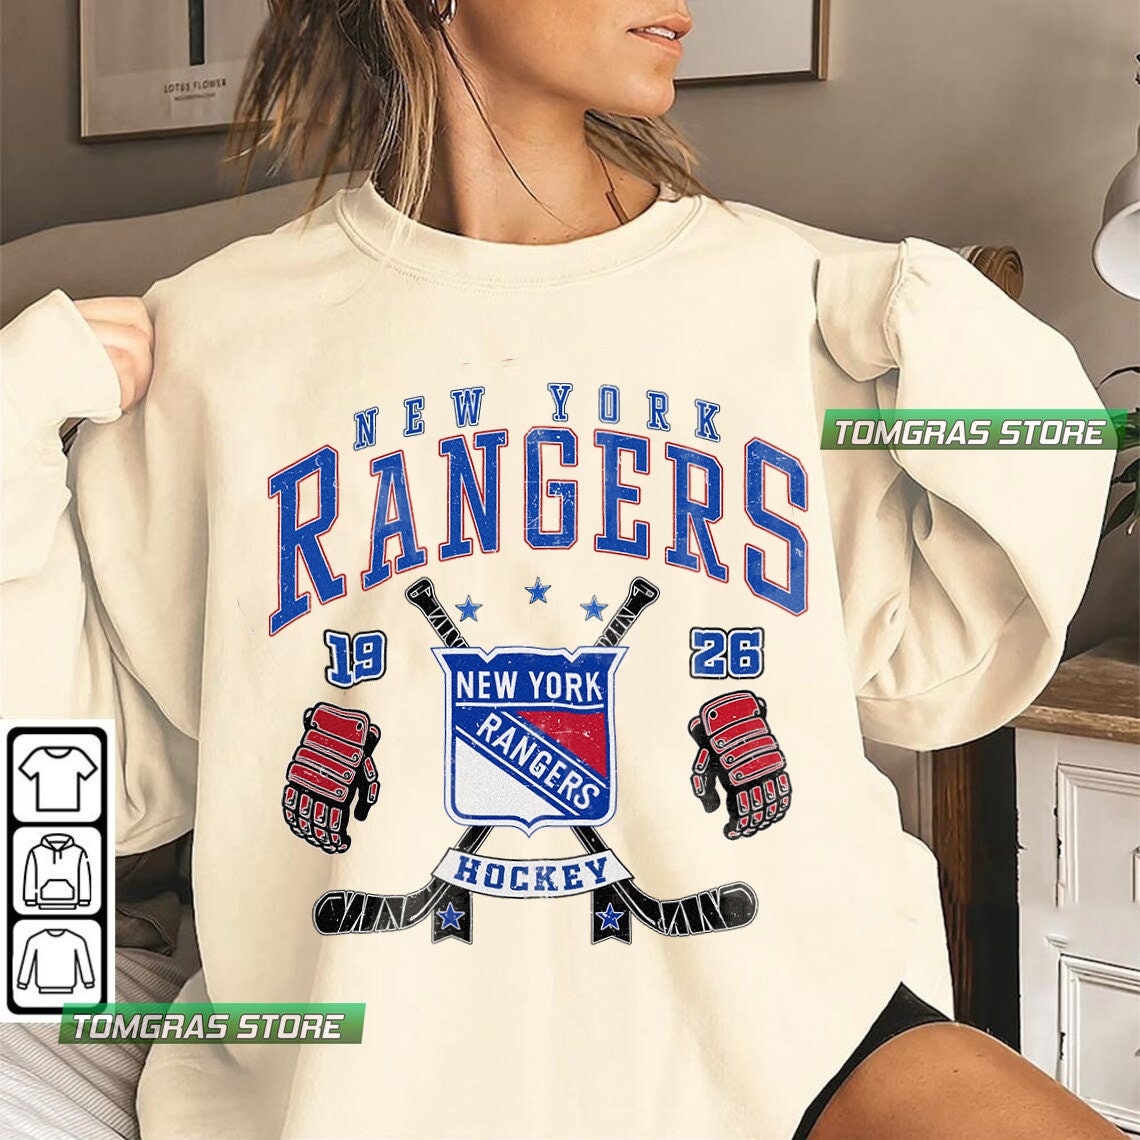 Vintage NHL New York Rangers Sweatshirt Unisex Men Women KV3303